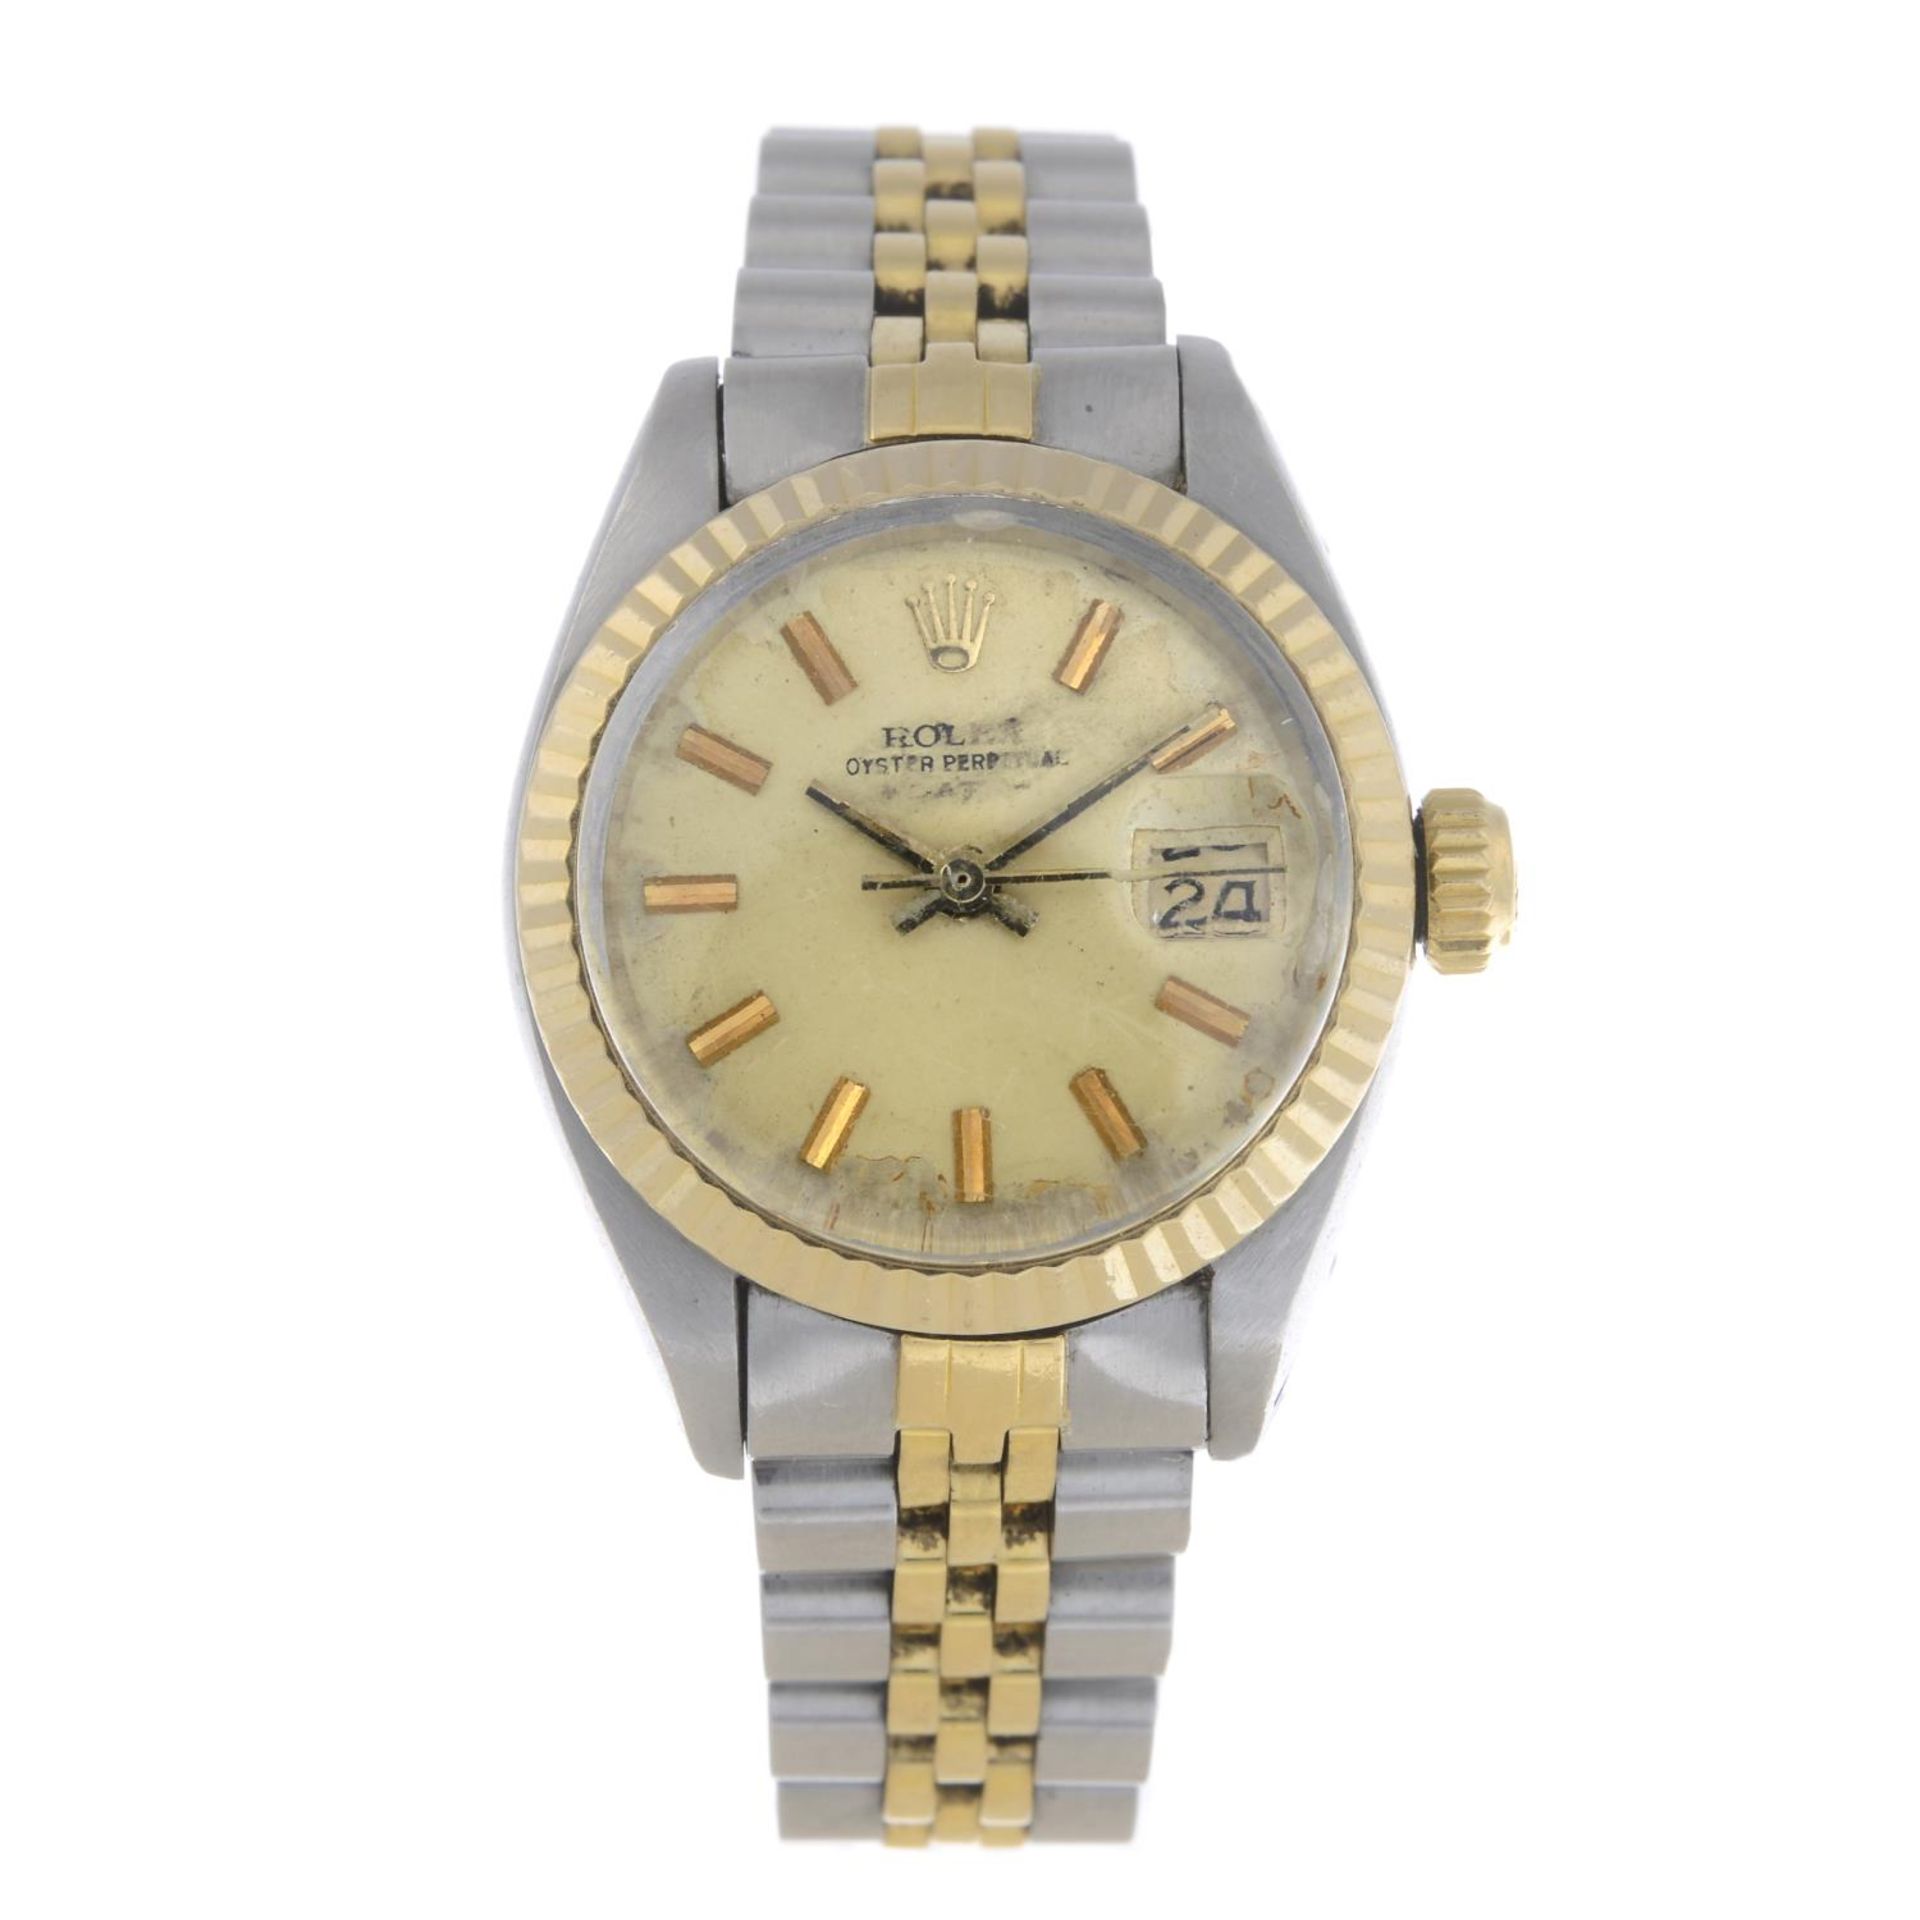 ROLEX - a lady's Oyster Perpetual Date bracelet watch.